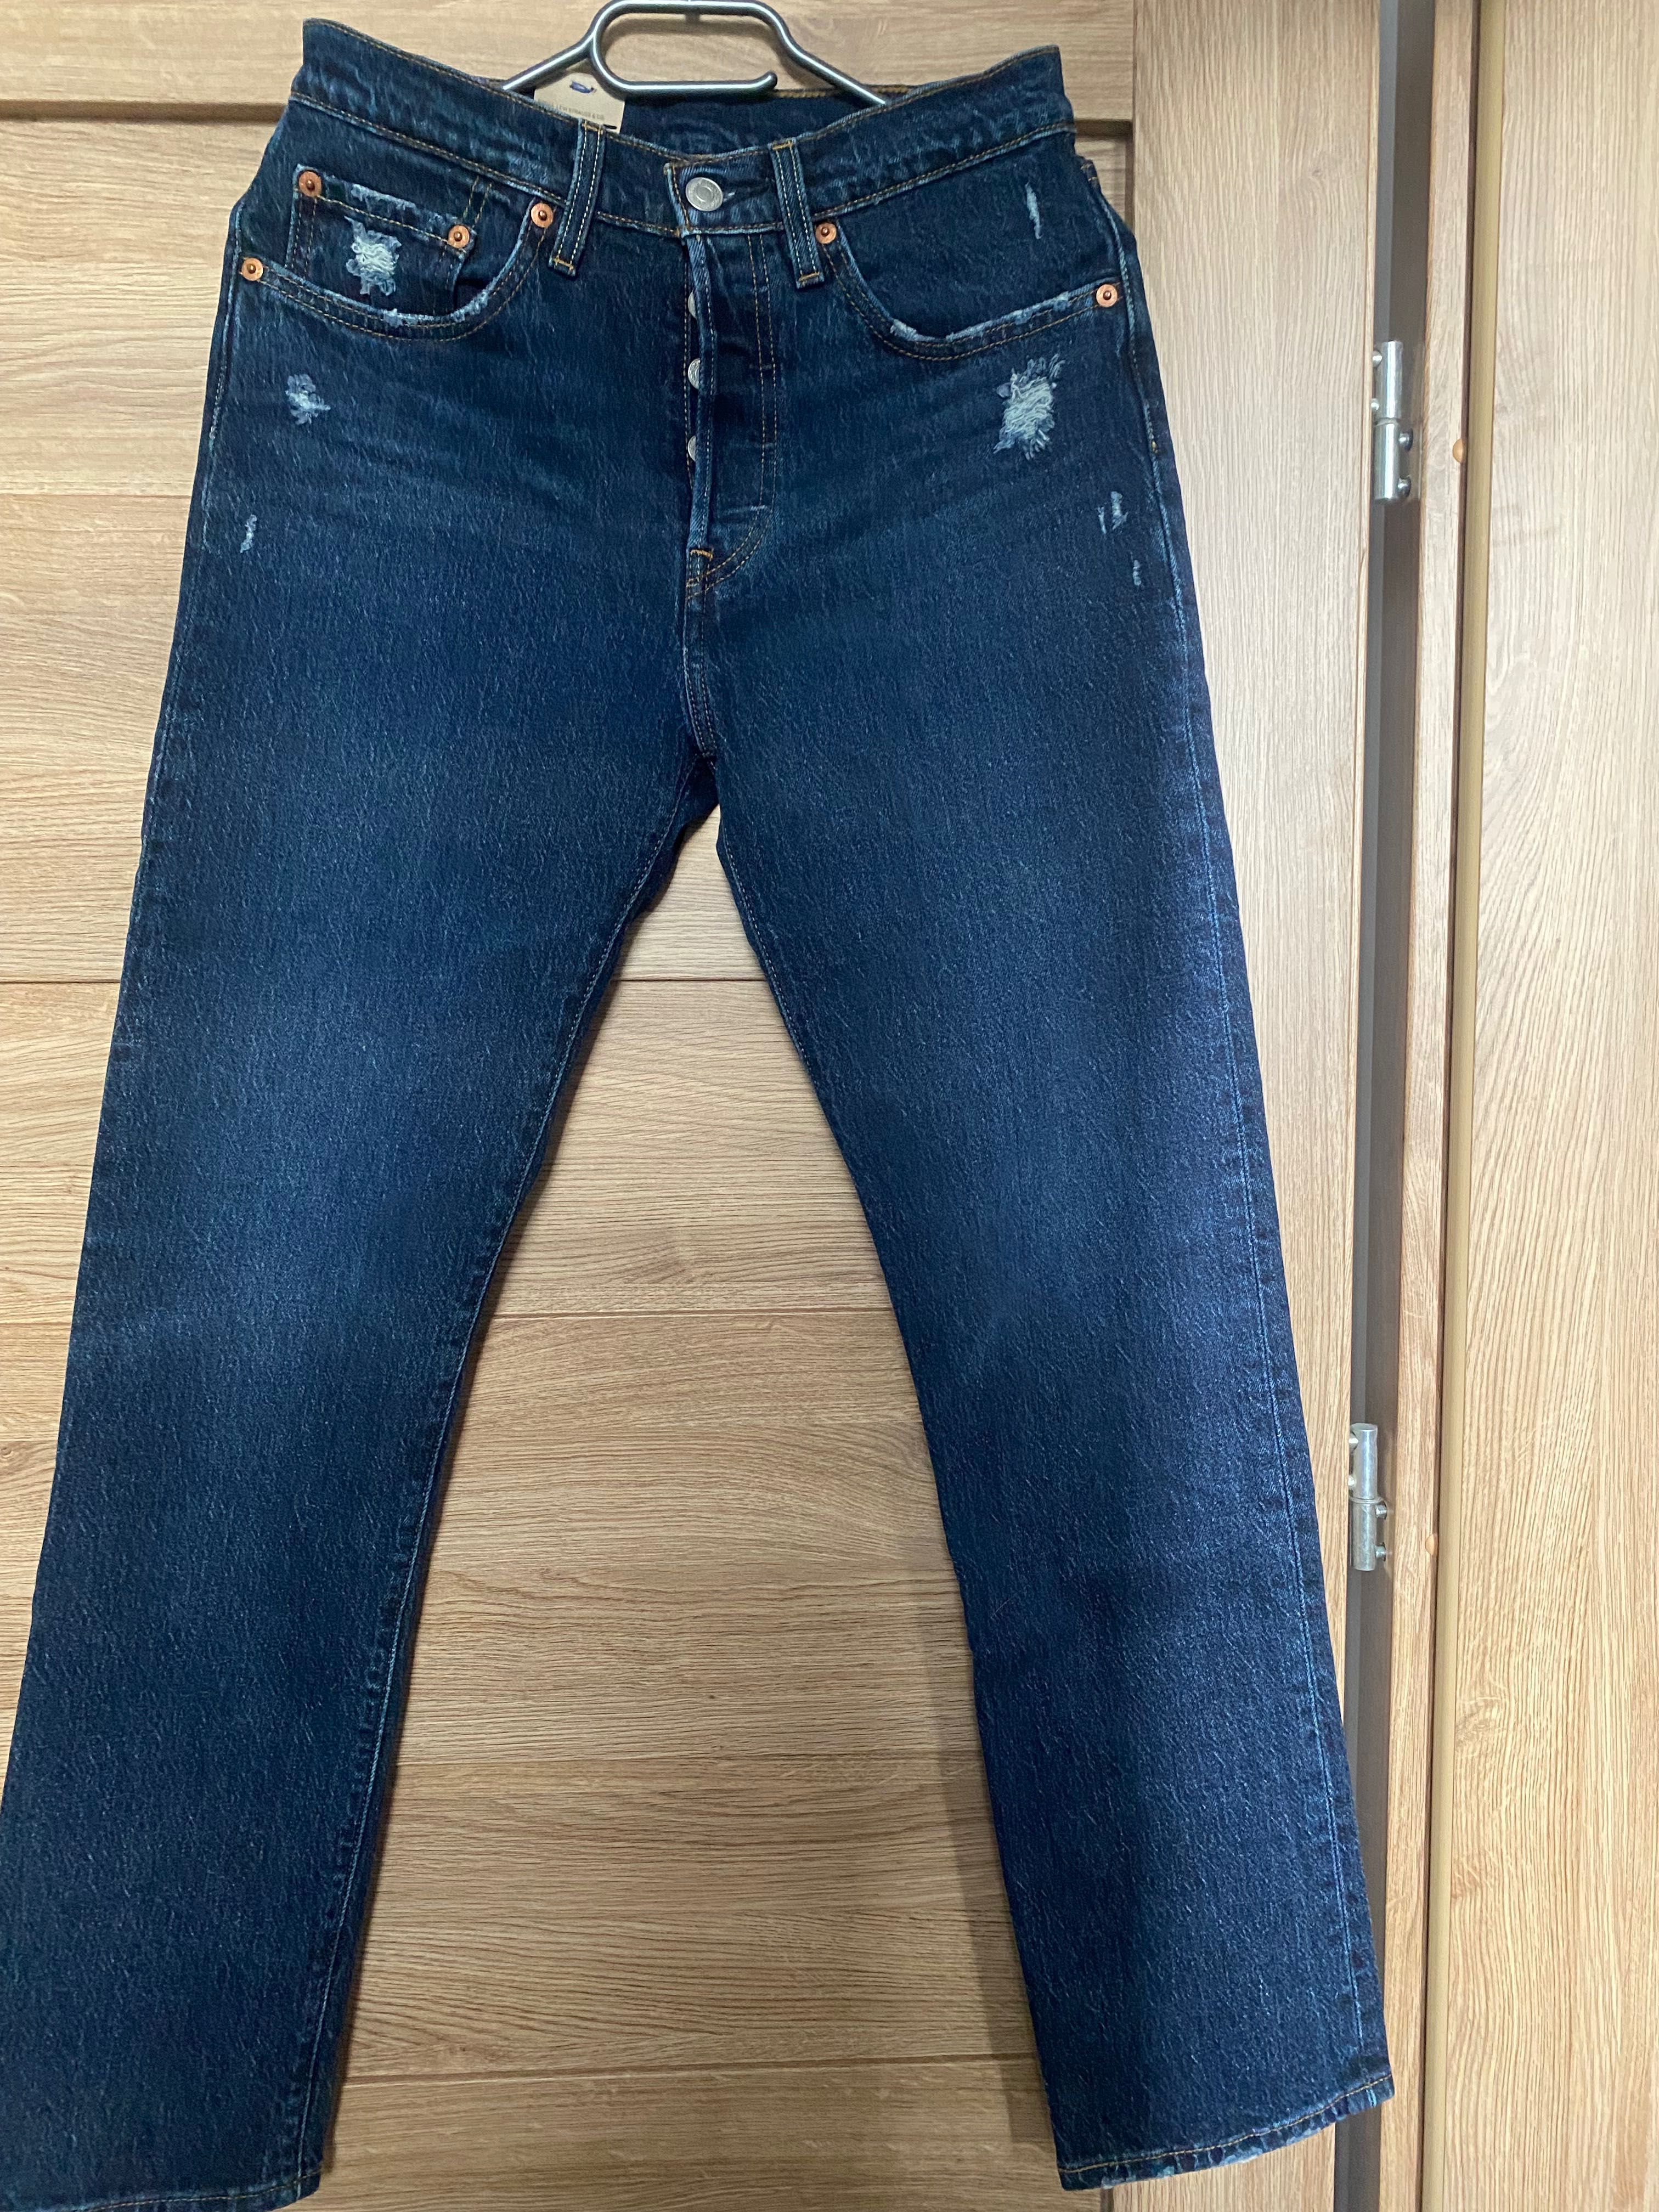 Levi’s 501 jeansy damskie